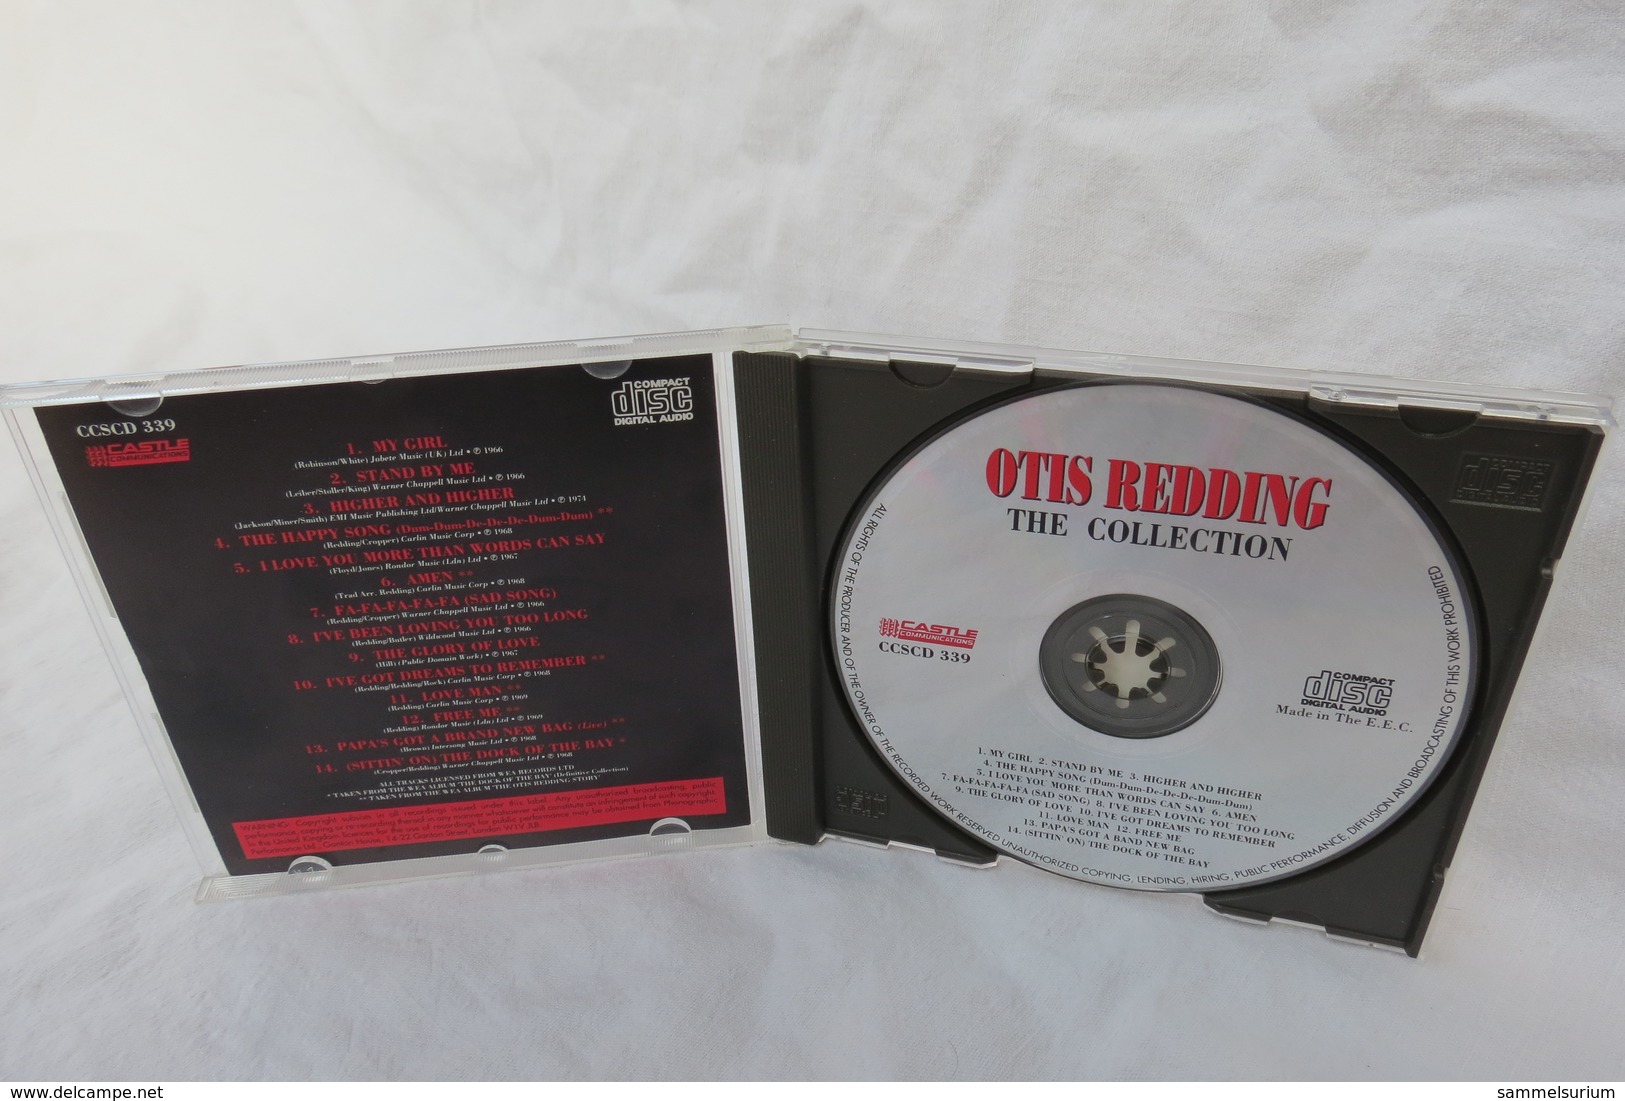 CD "Otis Redding" The Collection - Soul - R&B